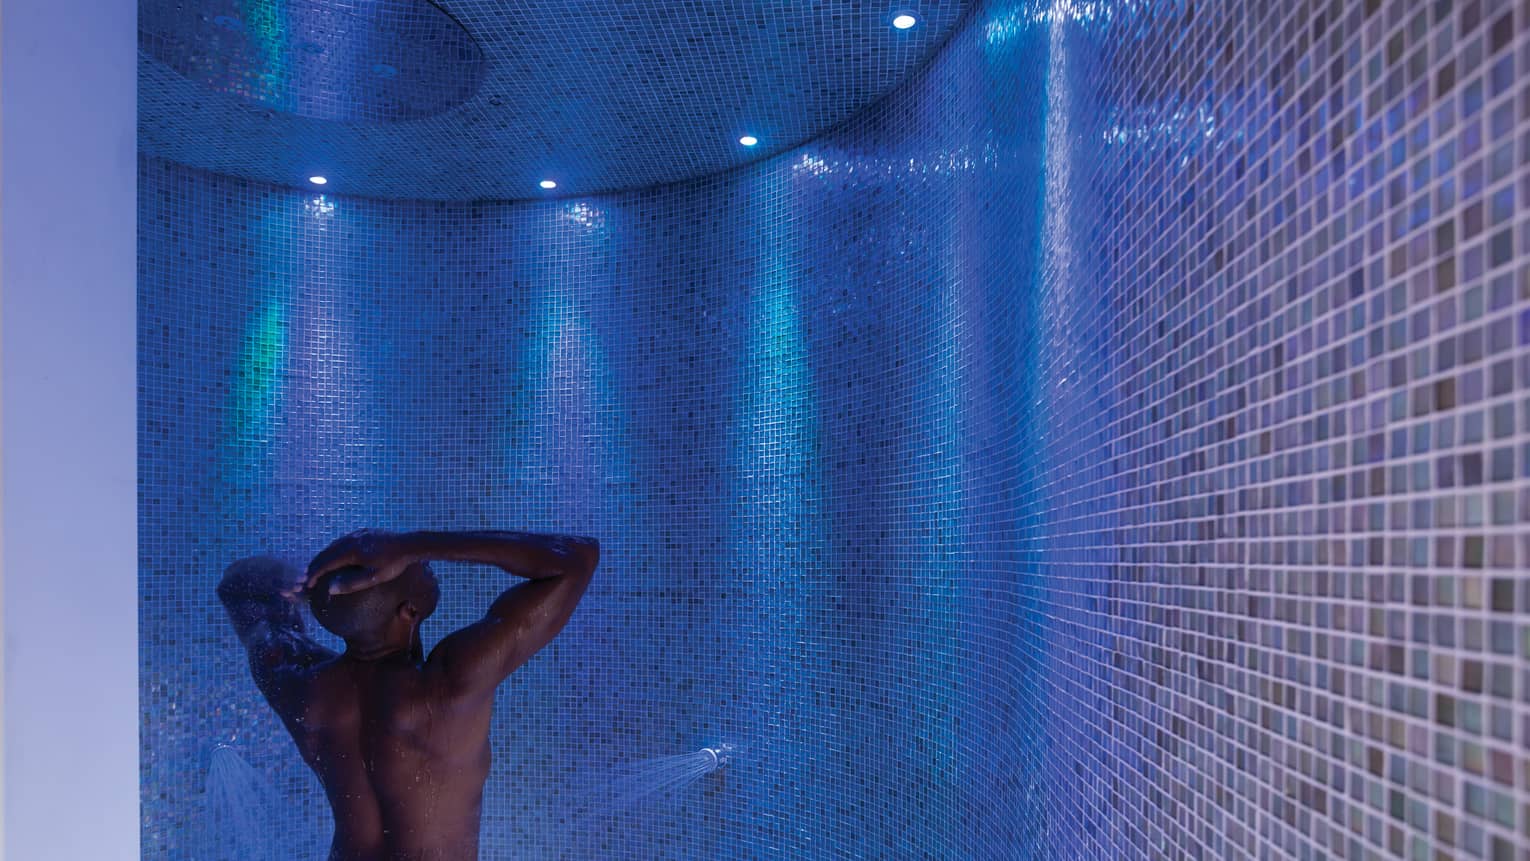 Man rinses off in tile spa shower under blue, purple lights